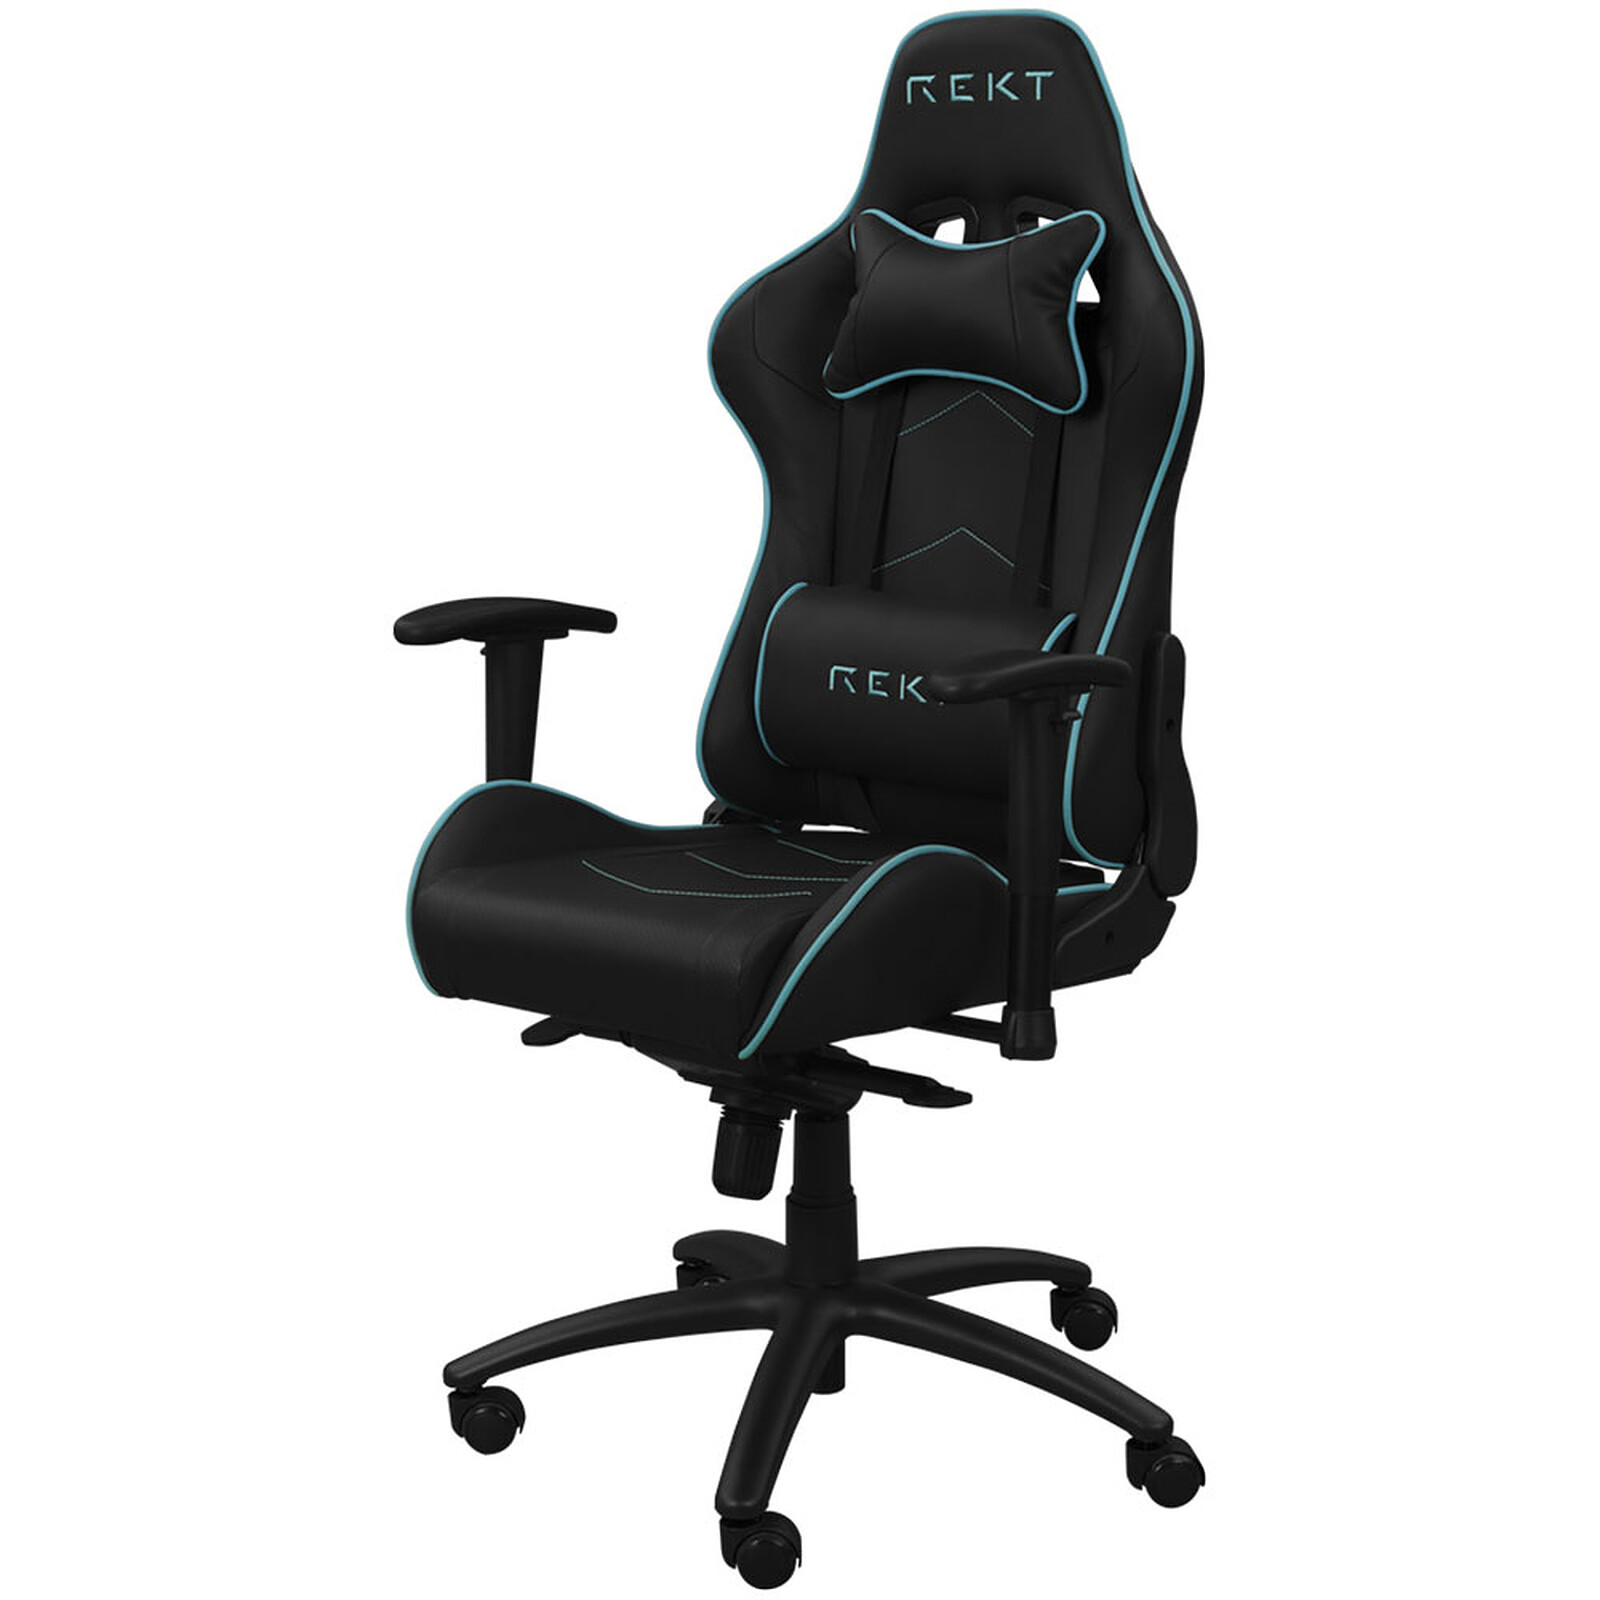 REKT BG1 (Blue) - Gaming chair - LDLC 3-year warranty | Holy Moley